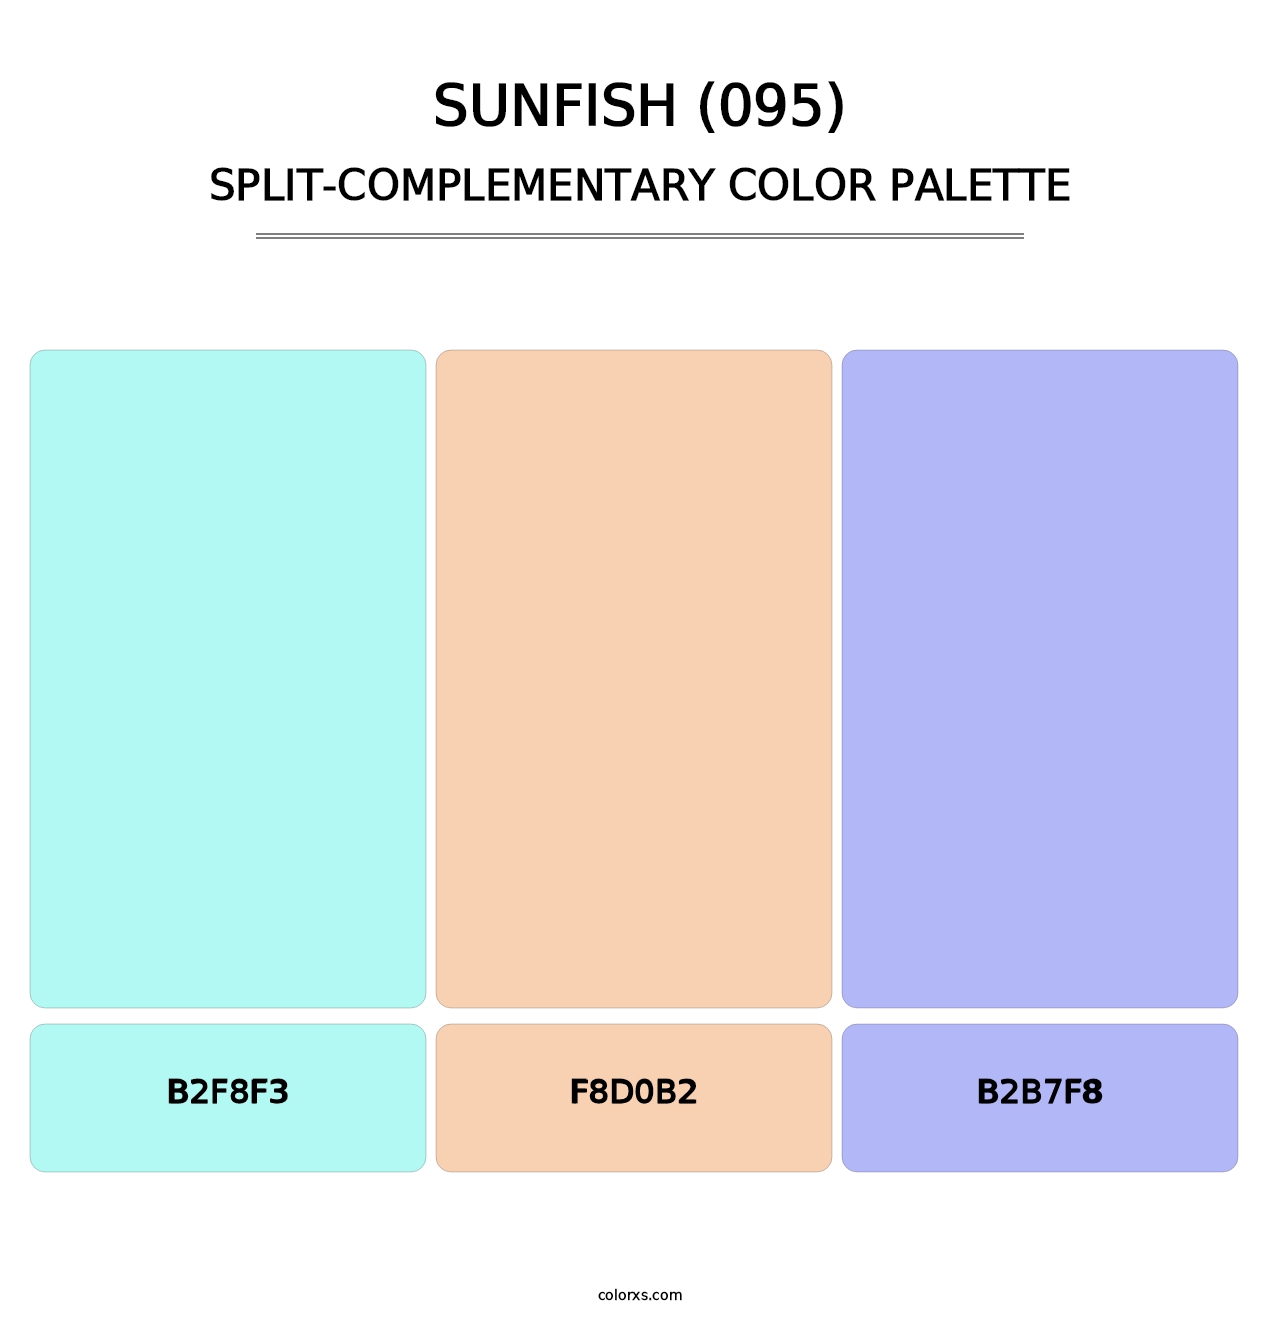 Sunfish (095) - Split-Complementary Color Palette